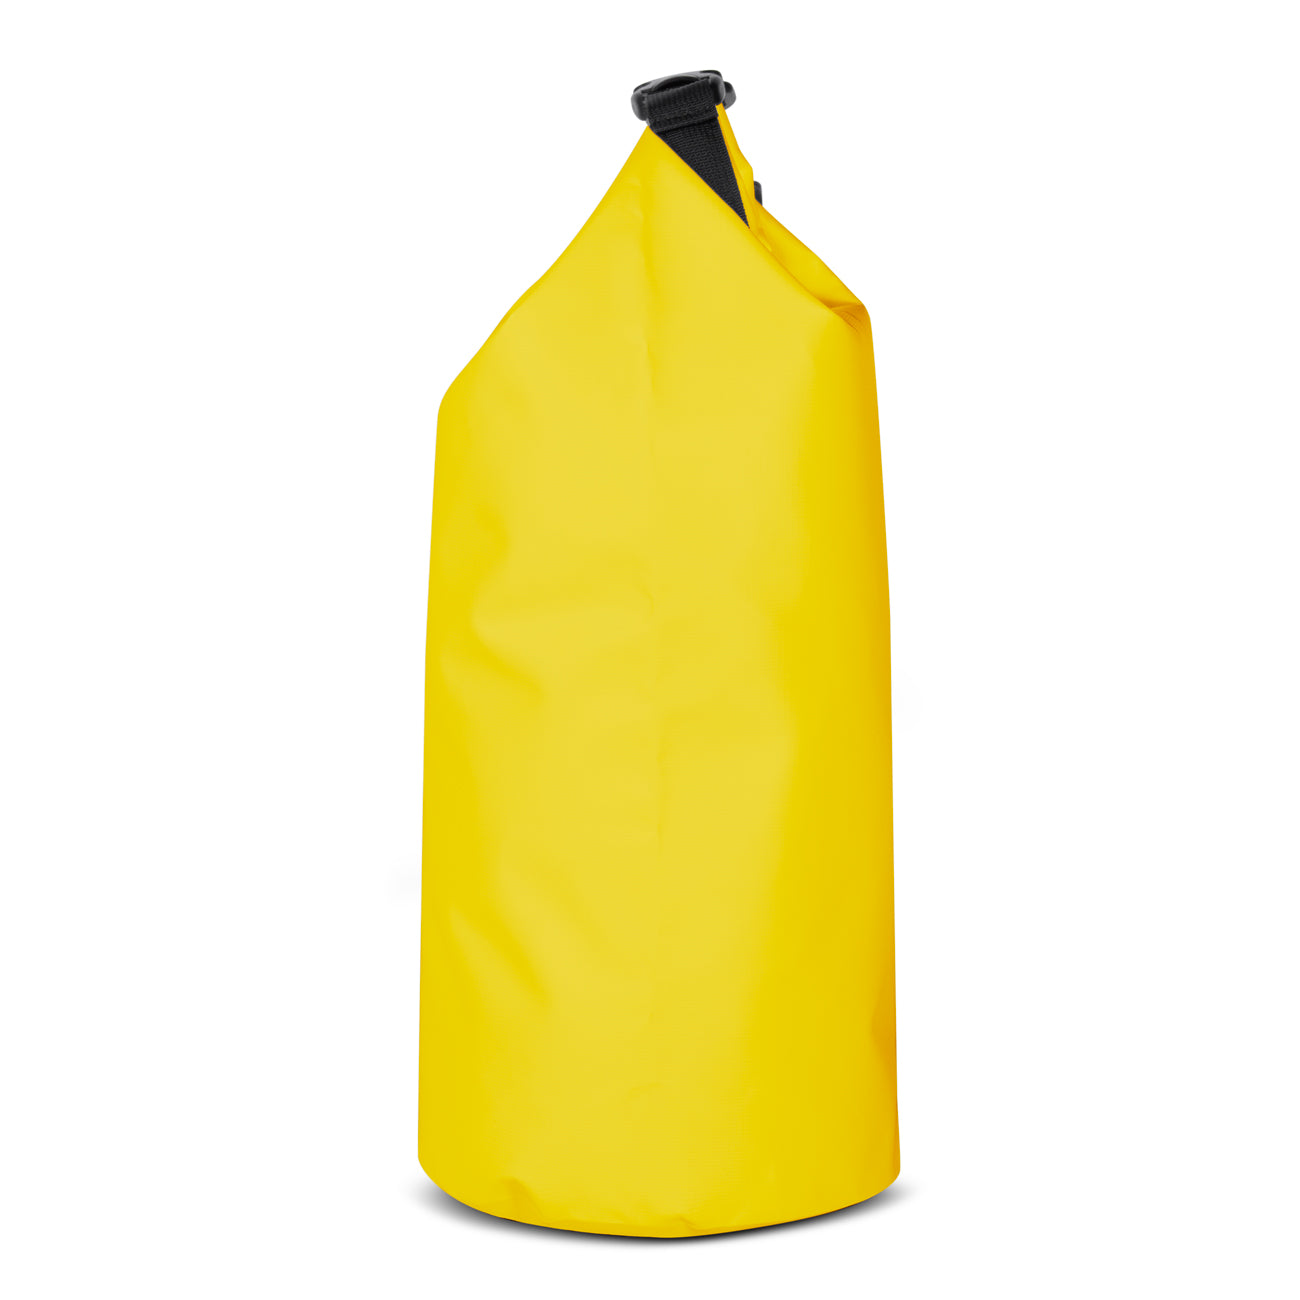 PVC waterproof backpack bag 10l - yellow